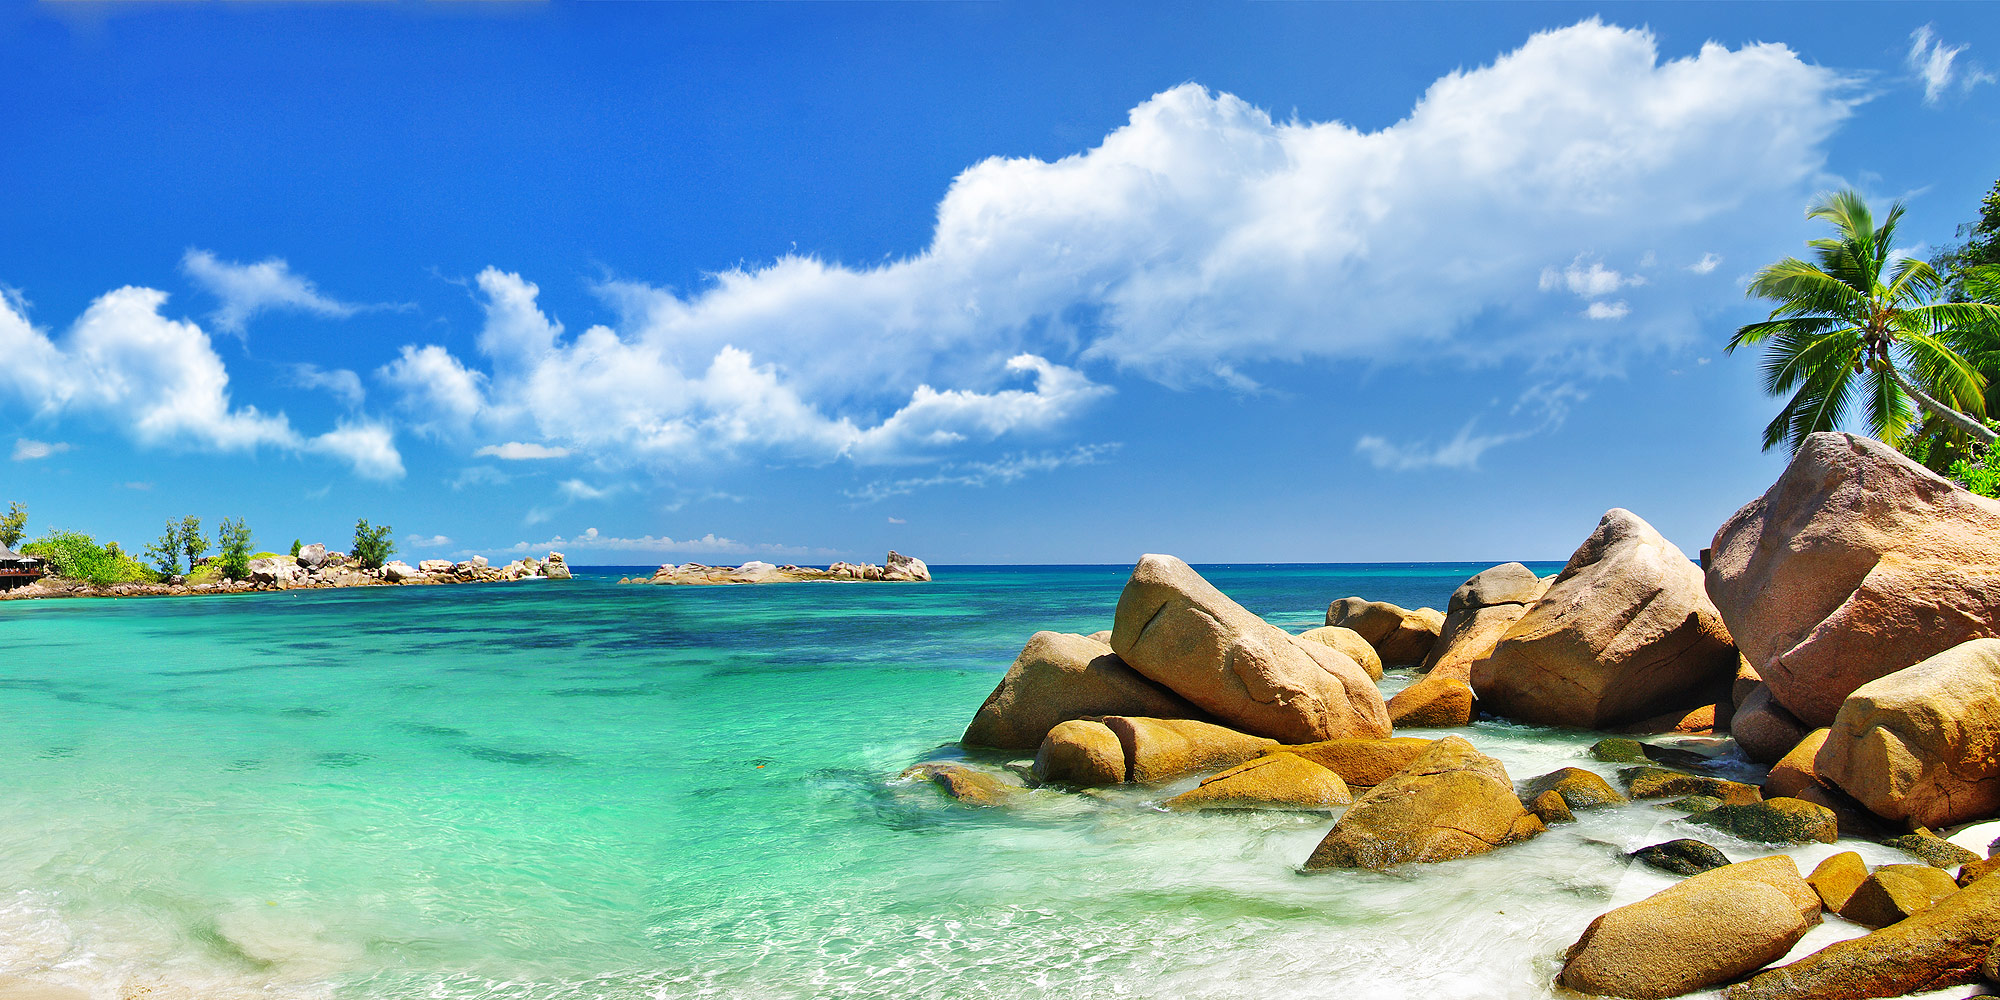 Seychelles Holidays & Travel Packages | Qatar Airways Holidays Kuwait